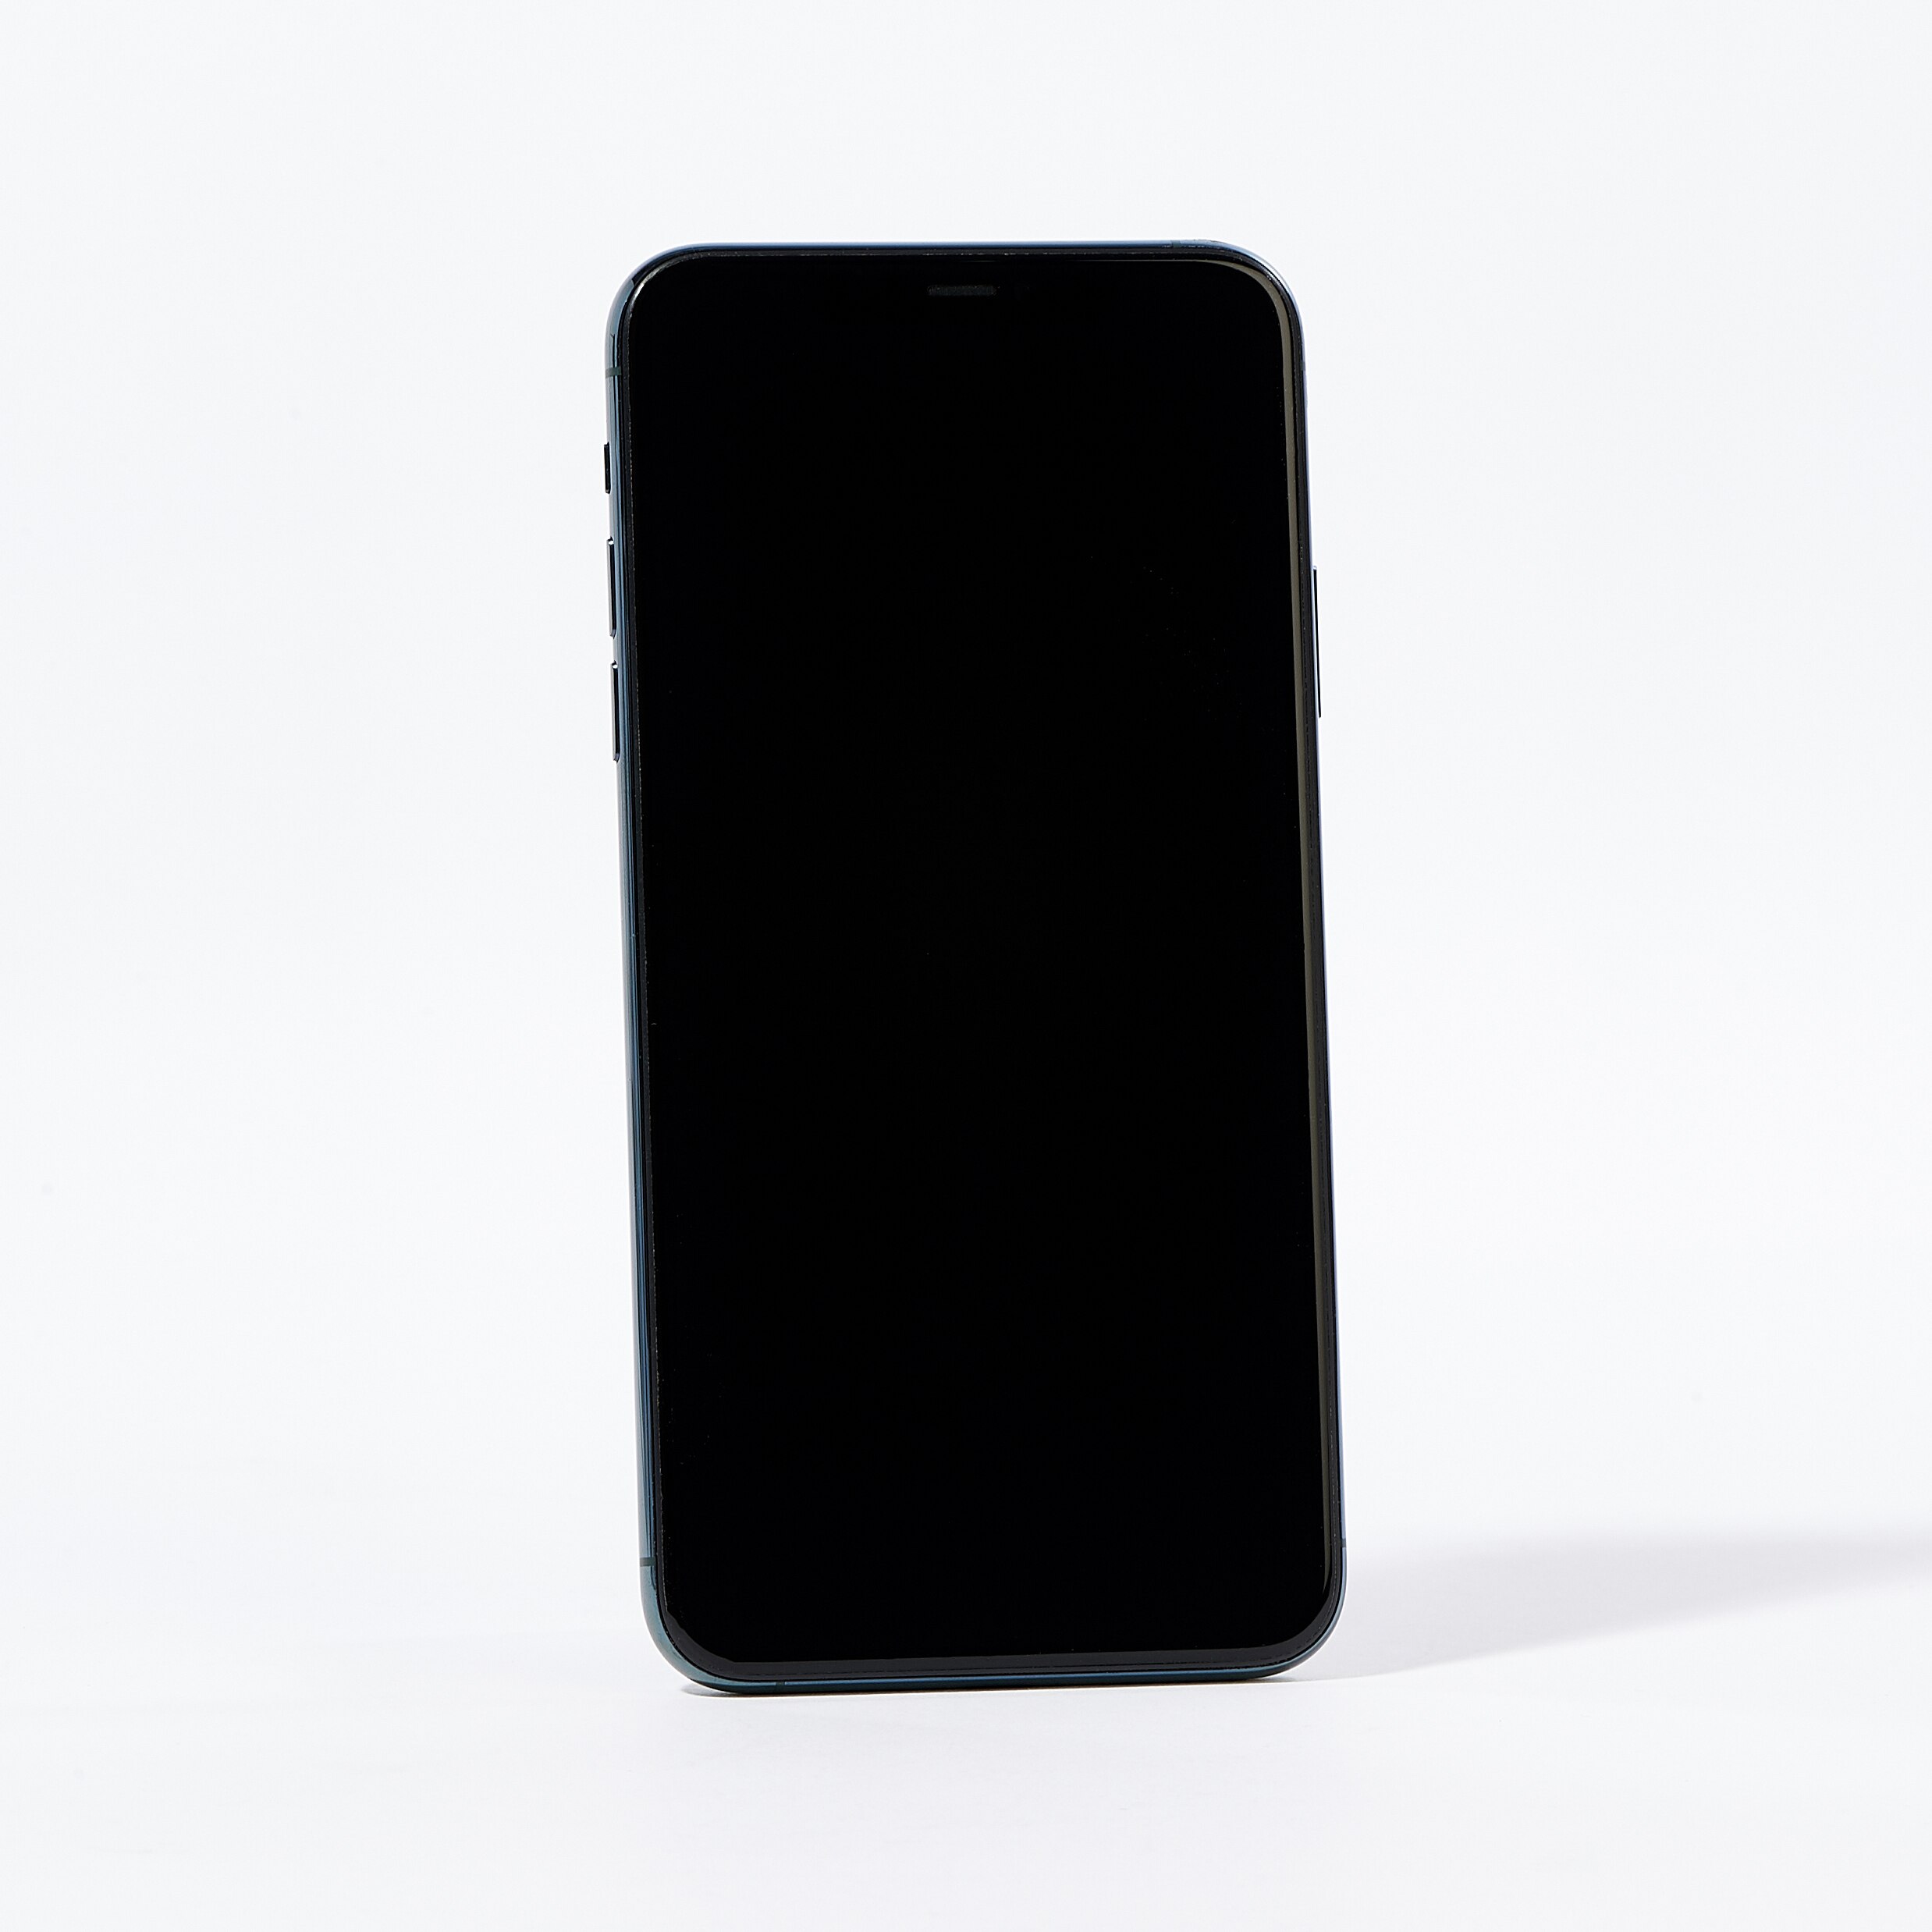 Electronics - Phones - Smartphones - Apple iPhone 11 Pro Max 256GB